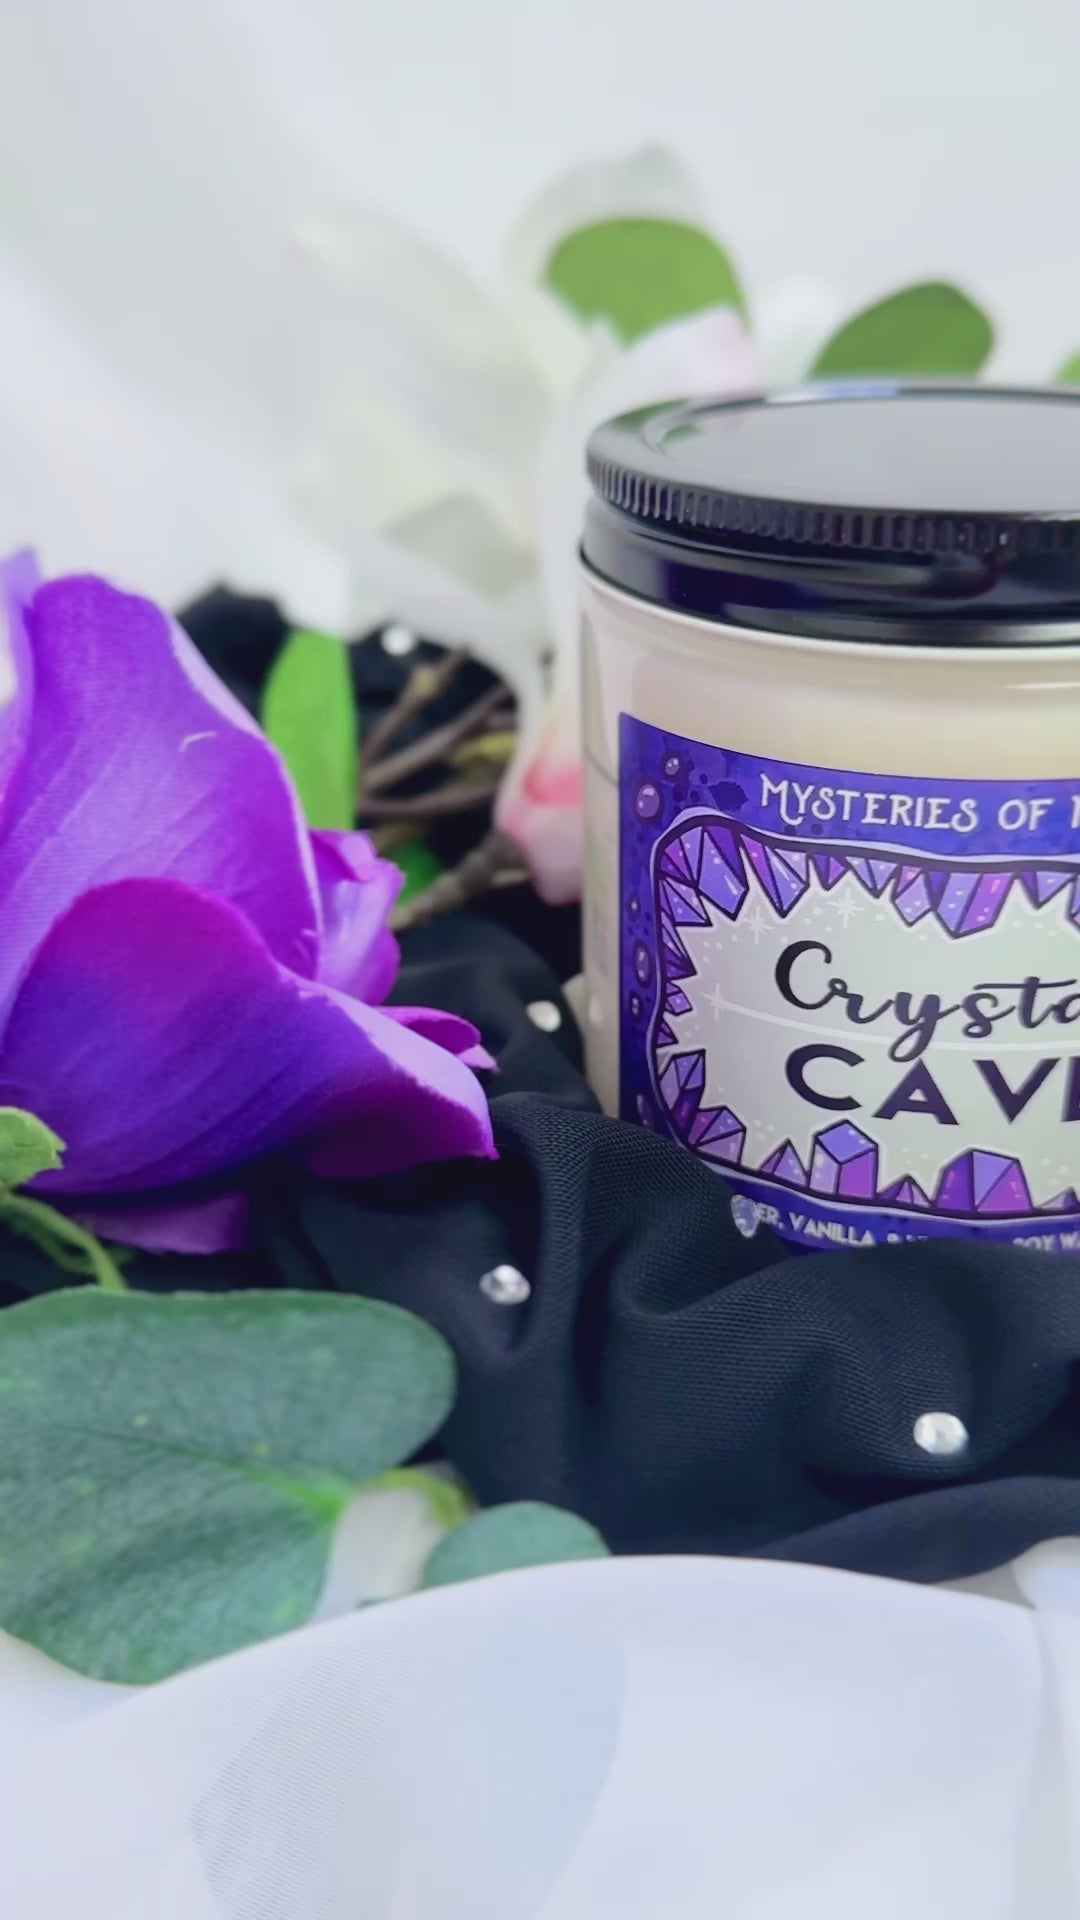 Crystal Cave - Lavender, Vanilla, & Lilac Scented